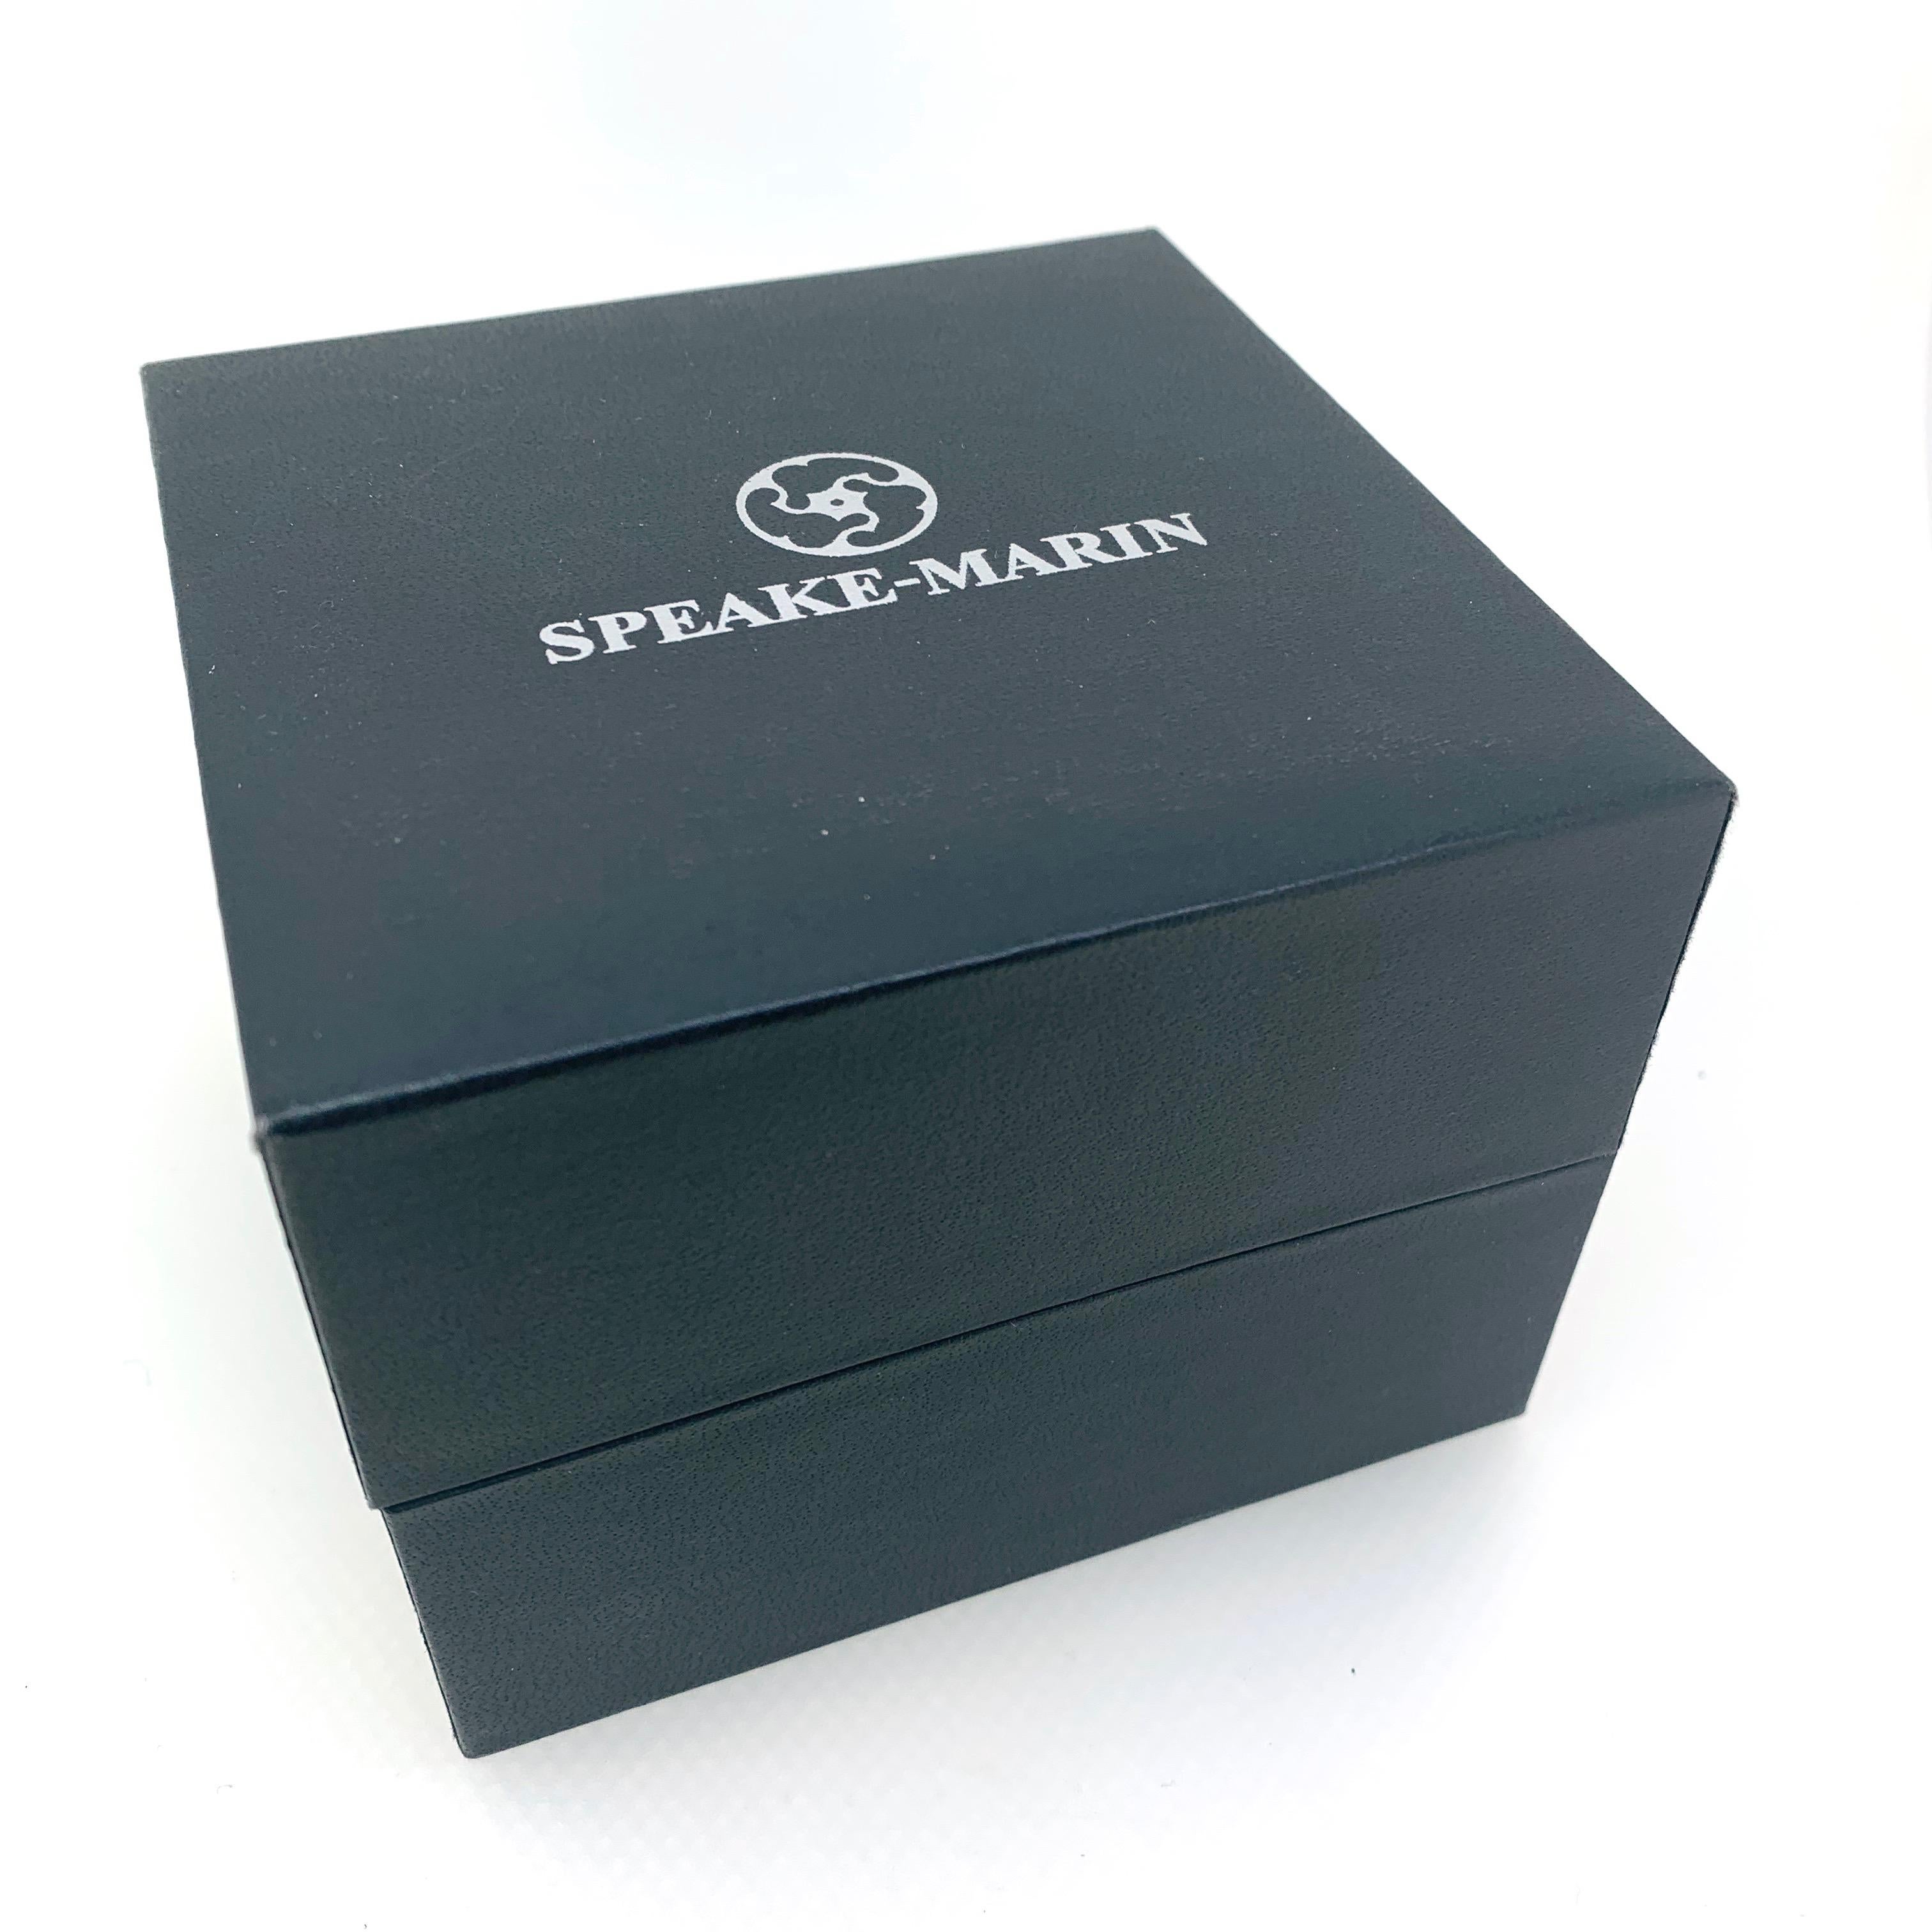 Speake-Marin Shenandoah Dual Timezone White Gold Women's Watch For Sale 4